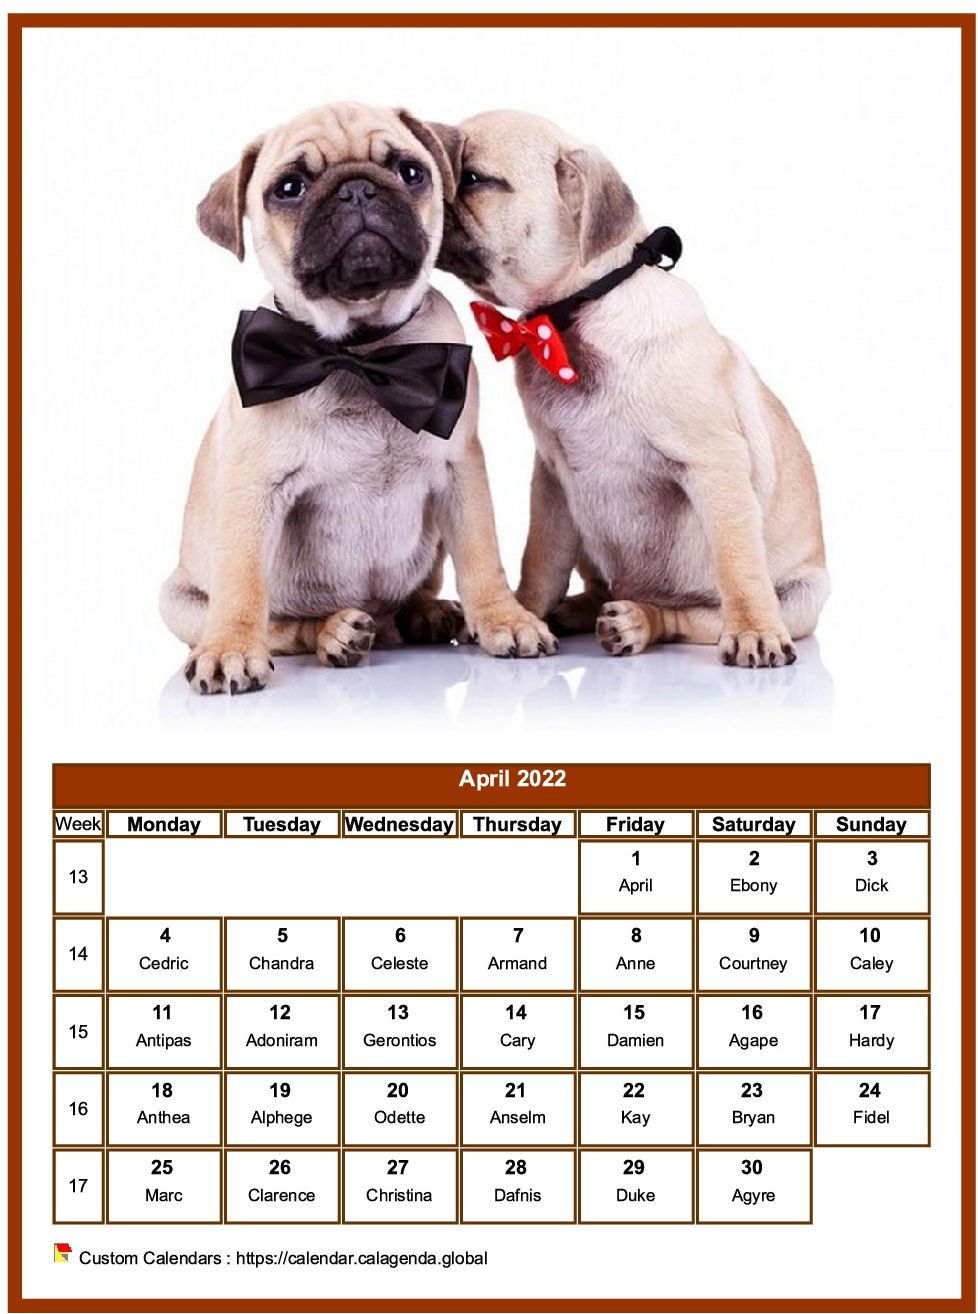 Calendar april 2022 dogs